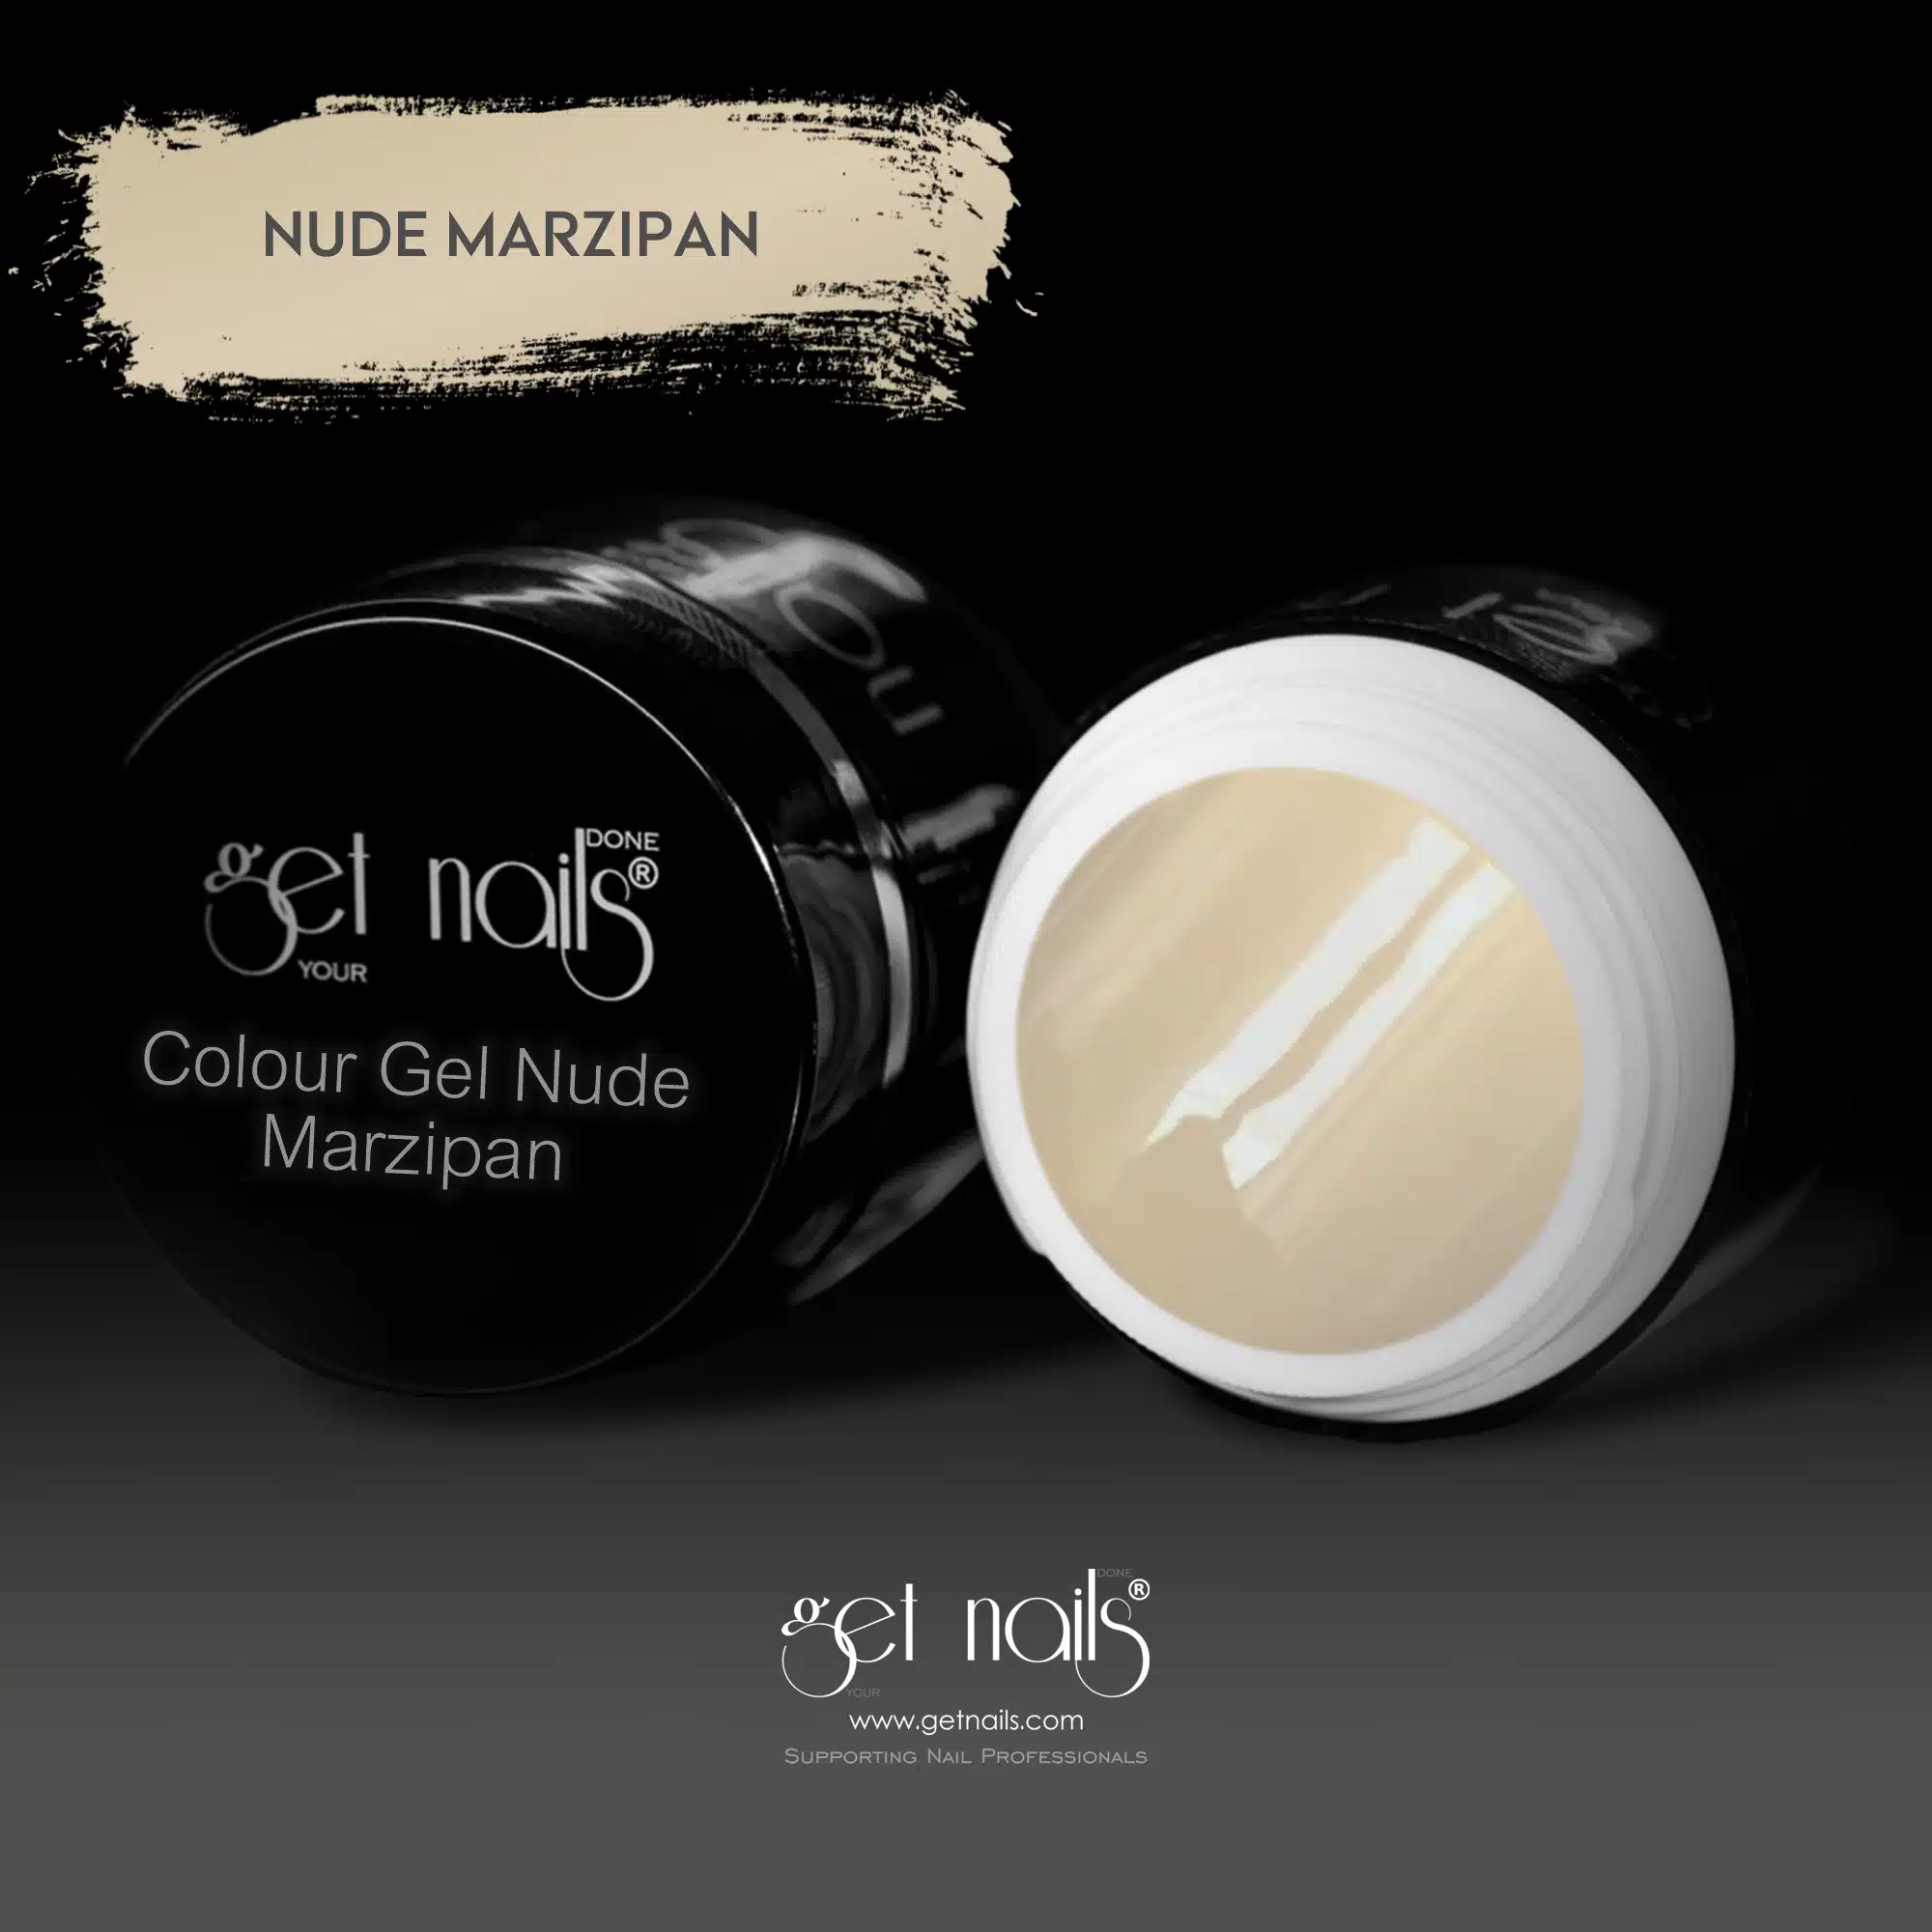 Get Nails Austria - Color Gel Nude Marzipan 5g